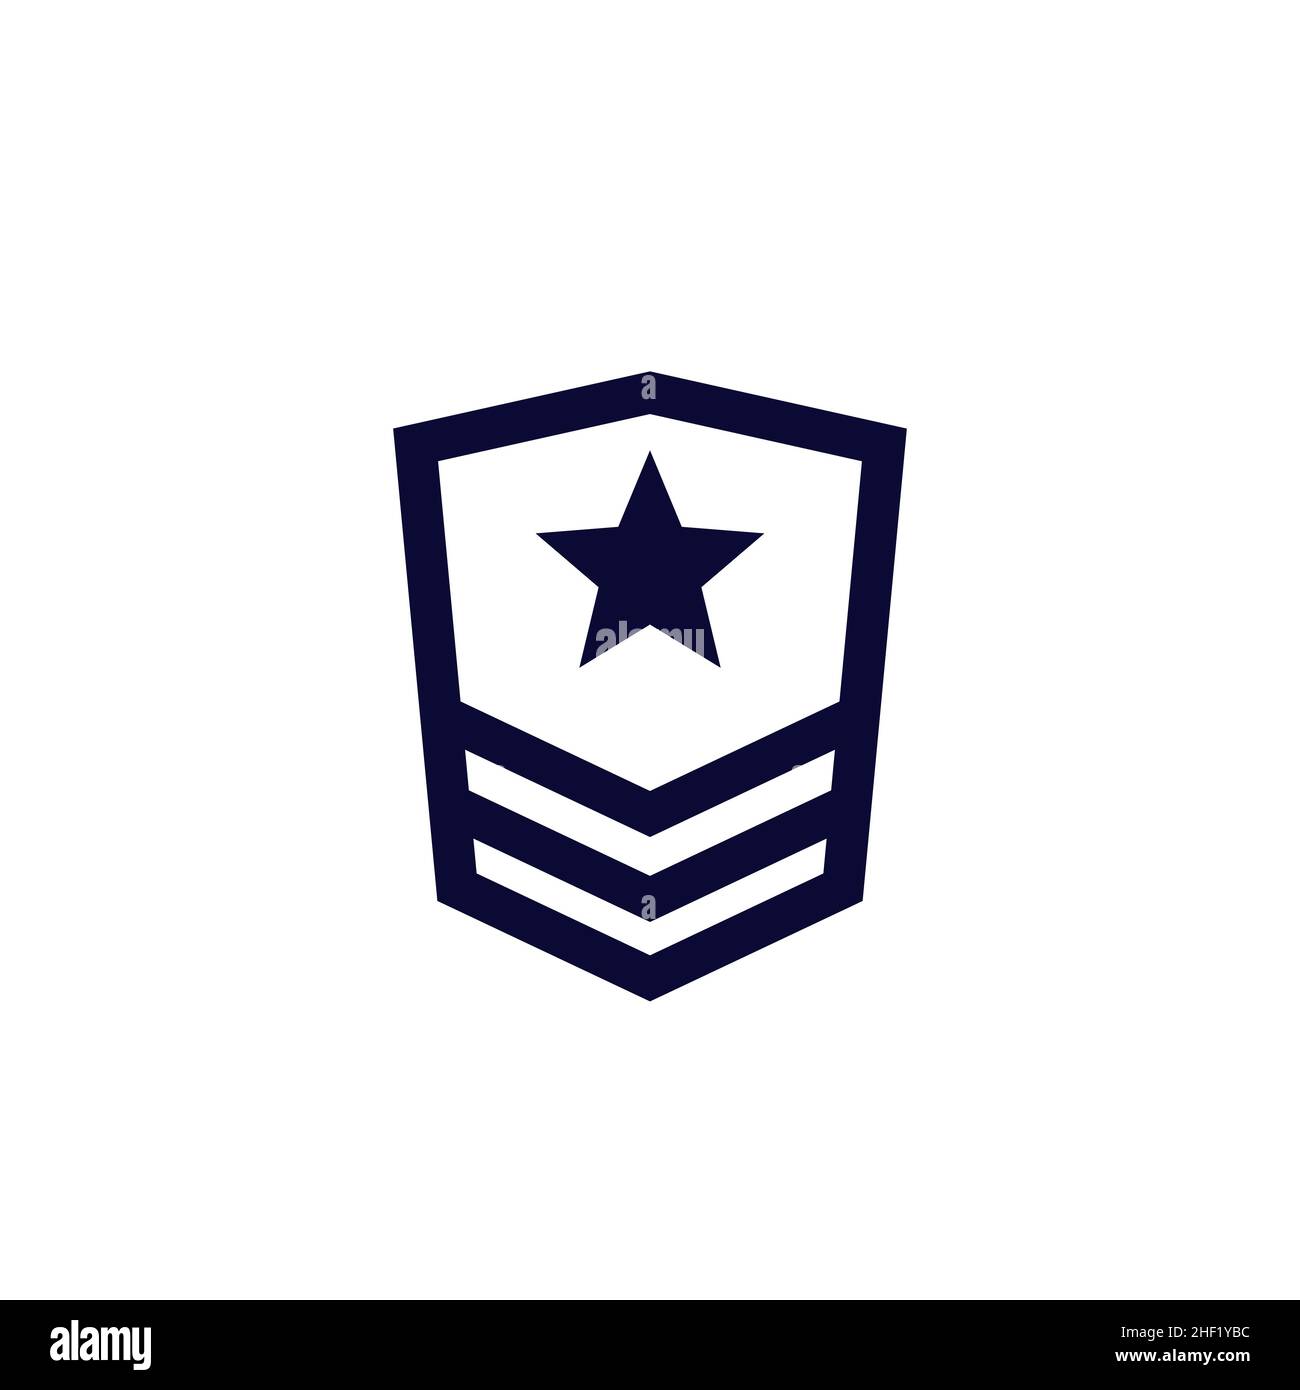 Military rank, army vector logo Stock Vector